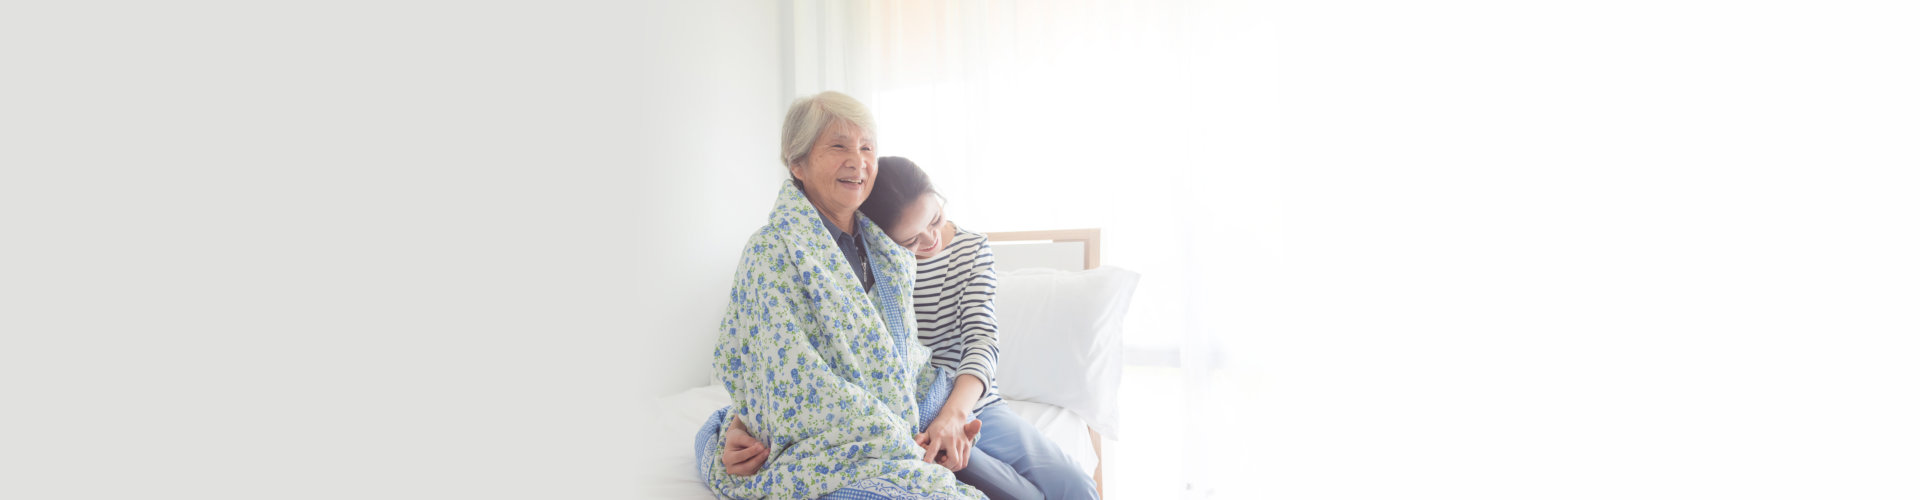 caregiver embracing an elderly woman